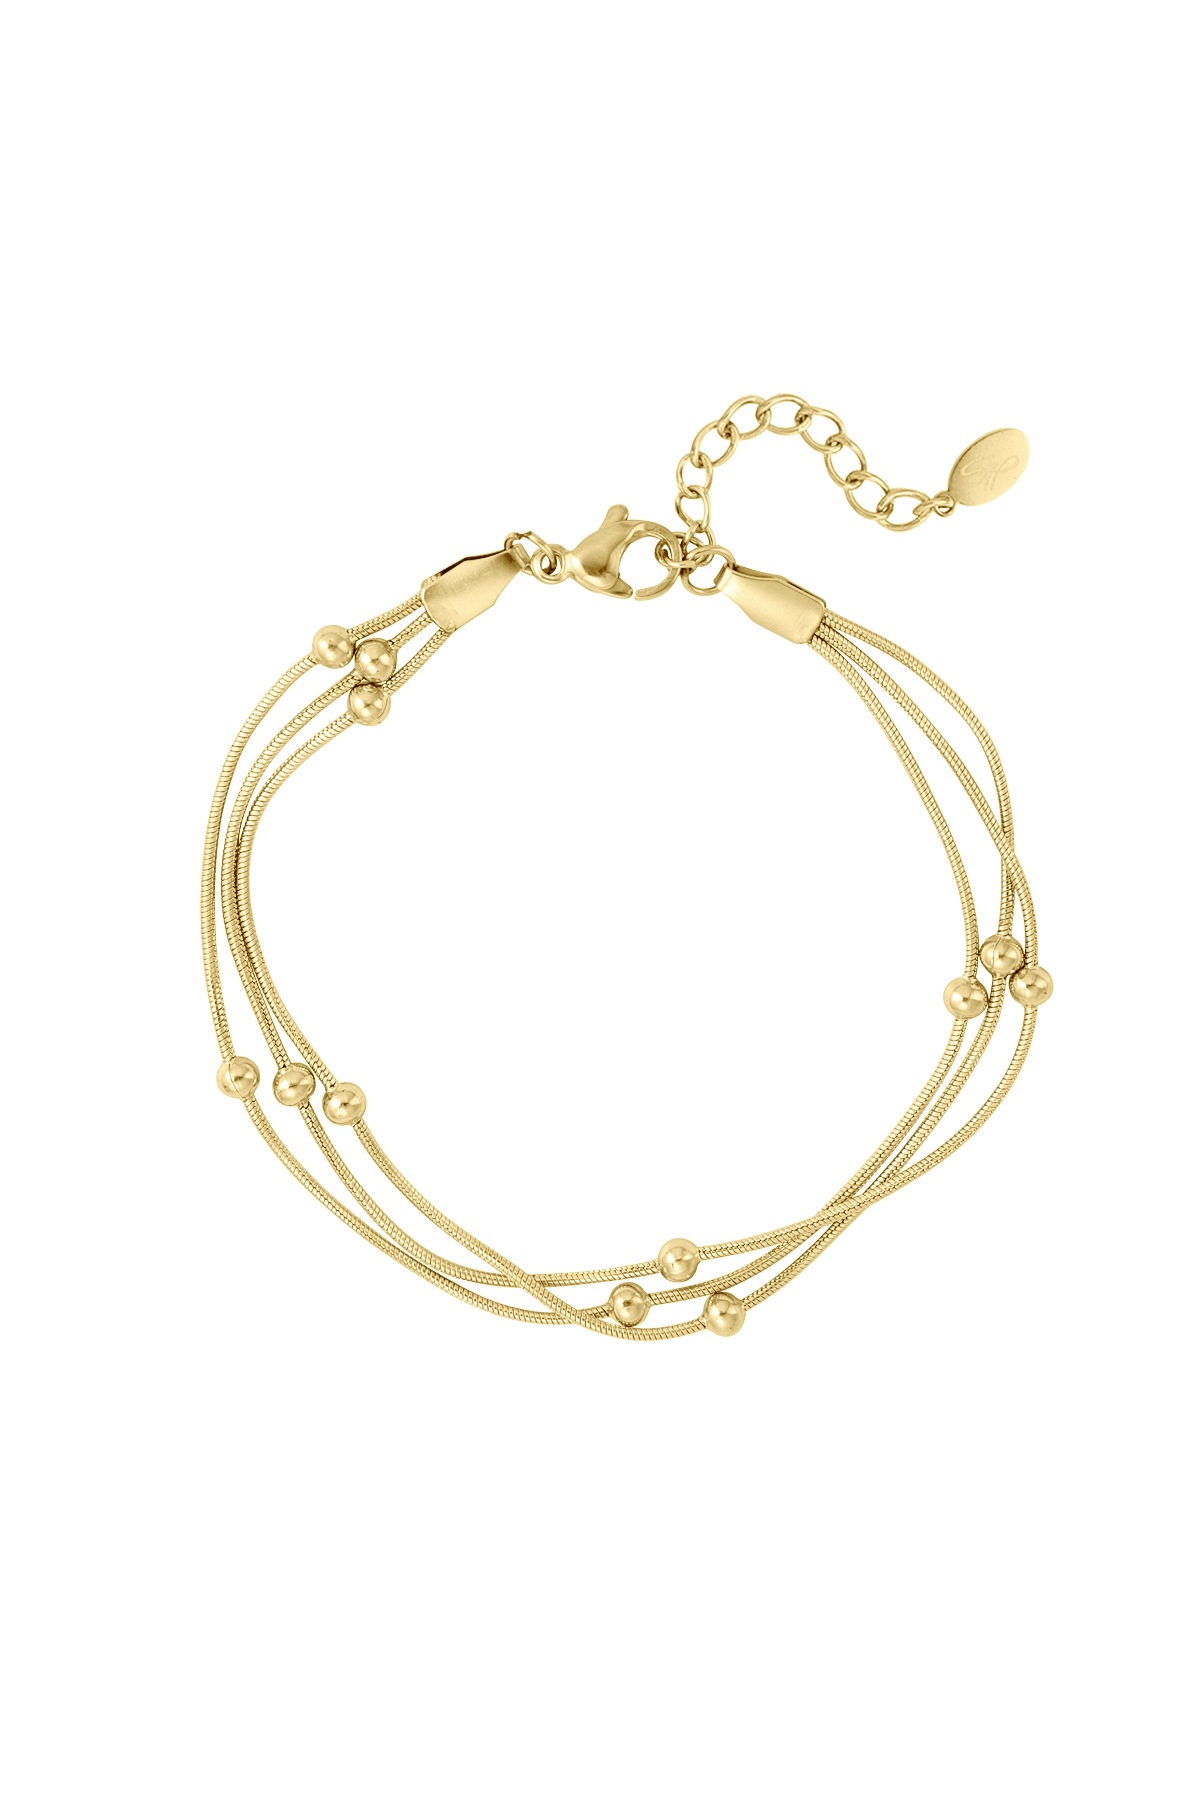 Bracelet with a twist - gold